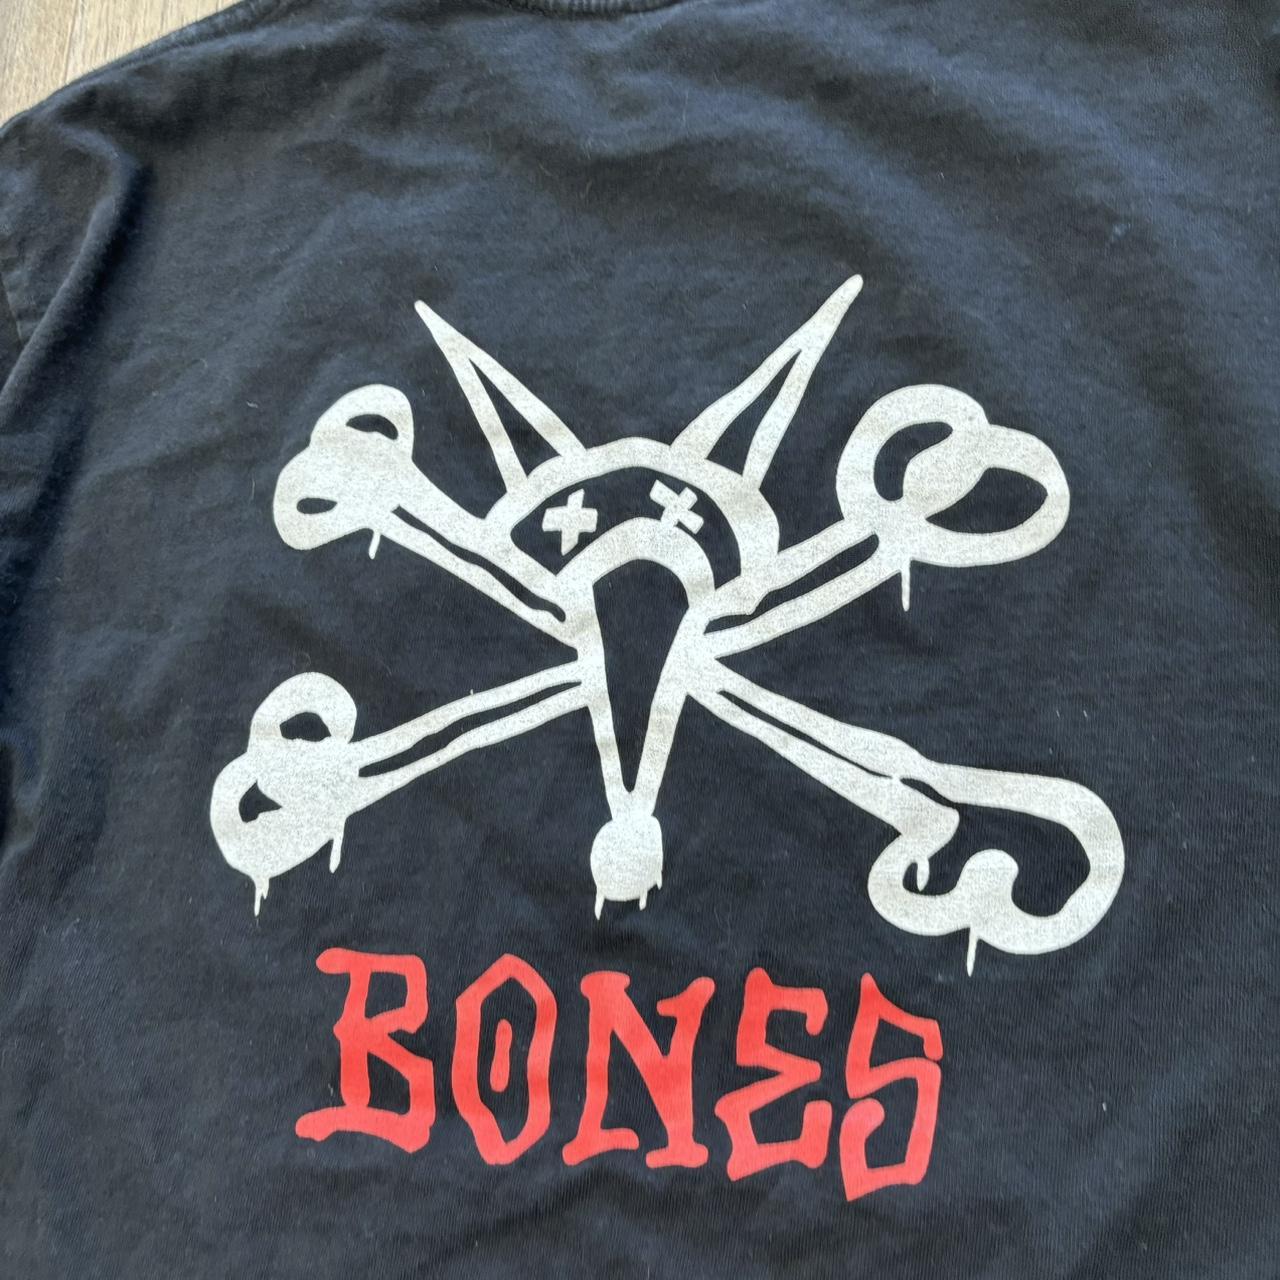 Bones Men's Black T-shirt (4)